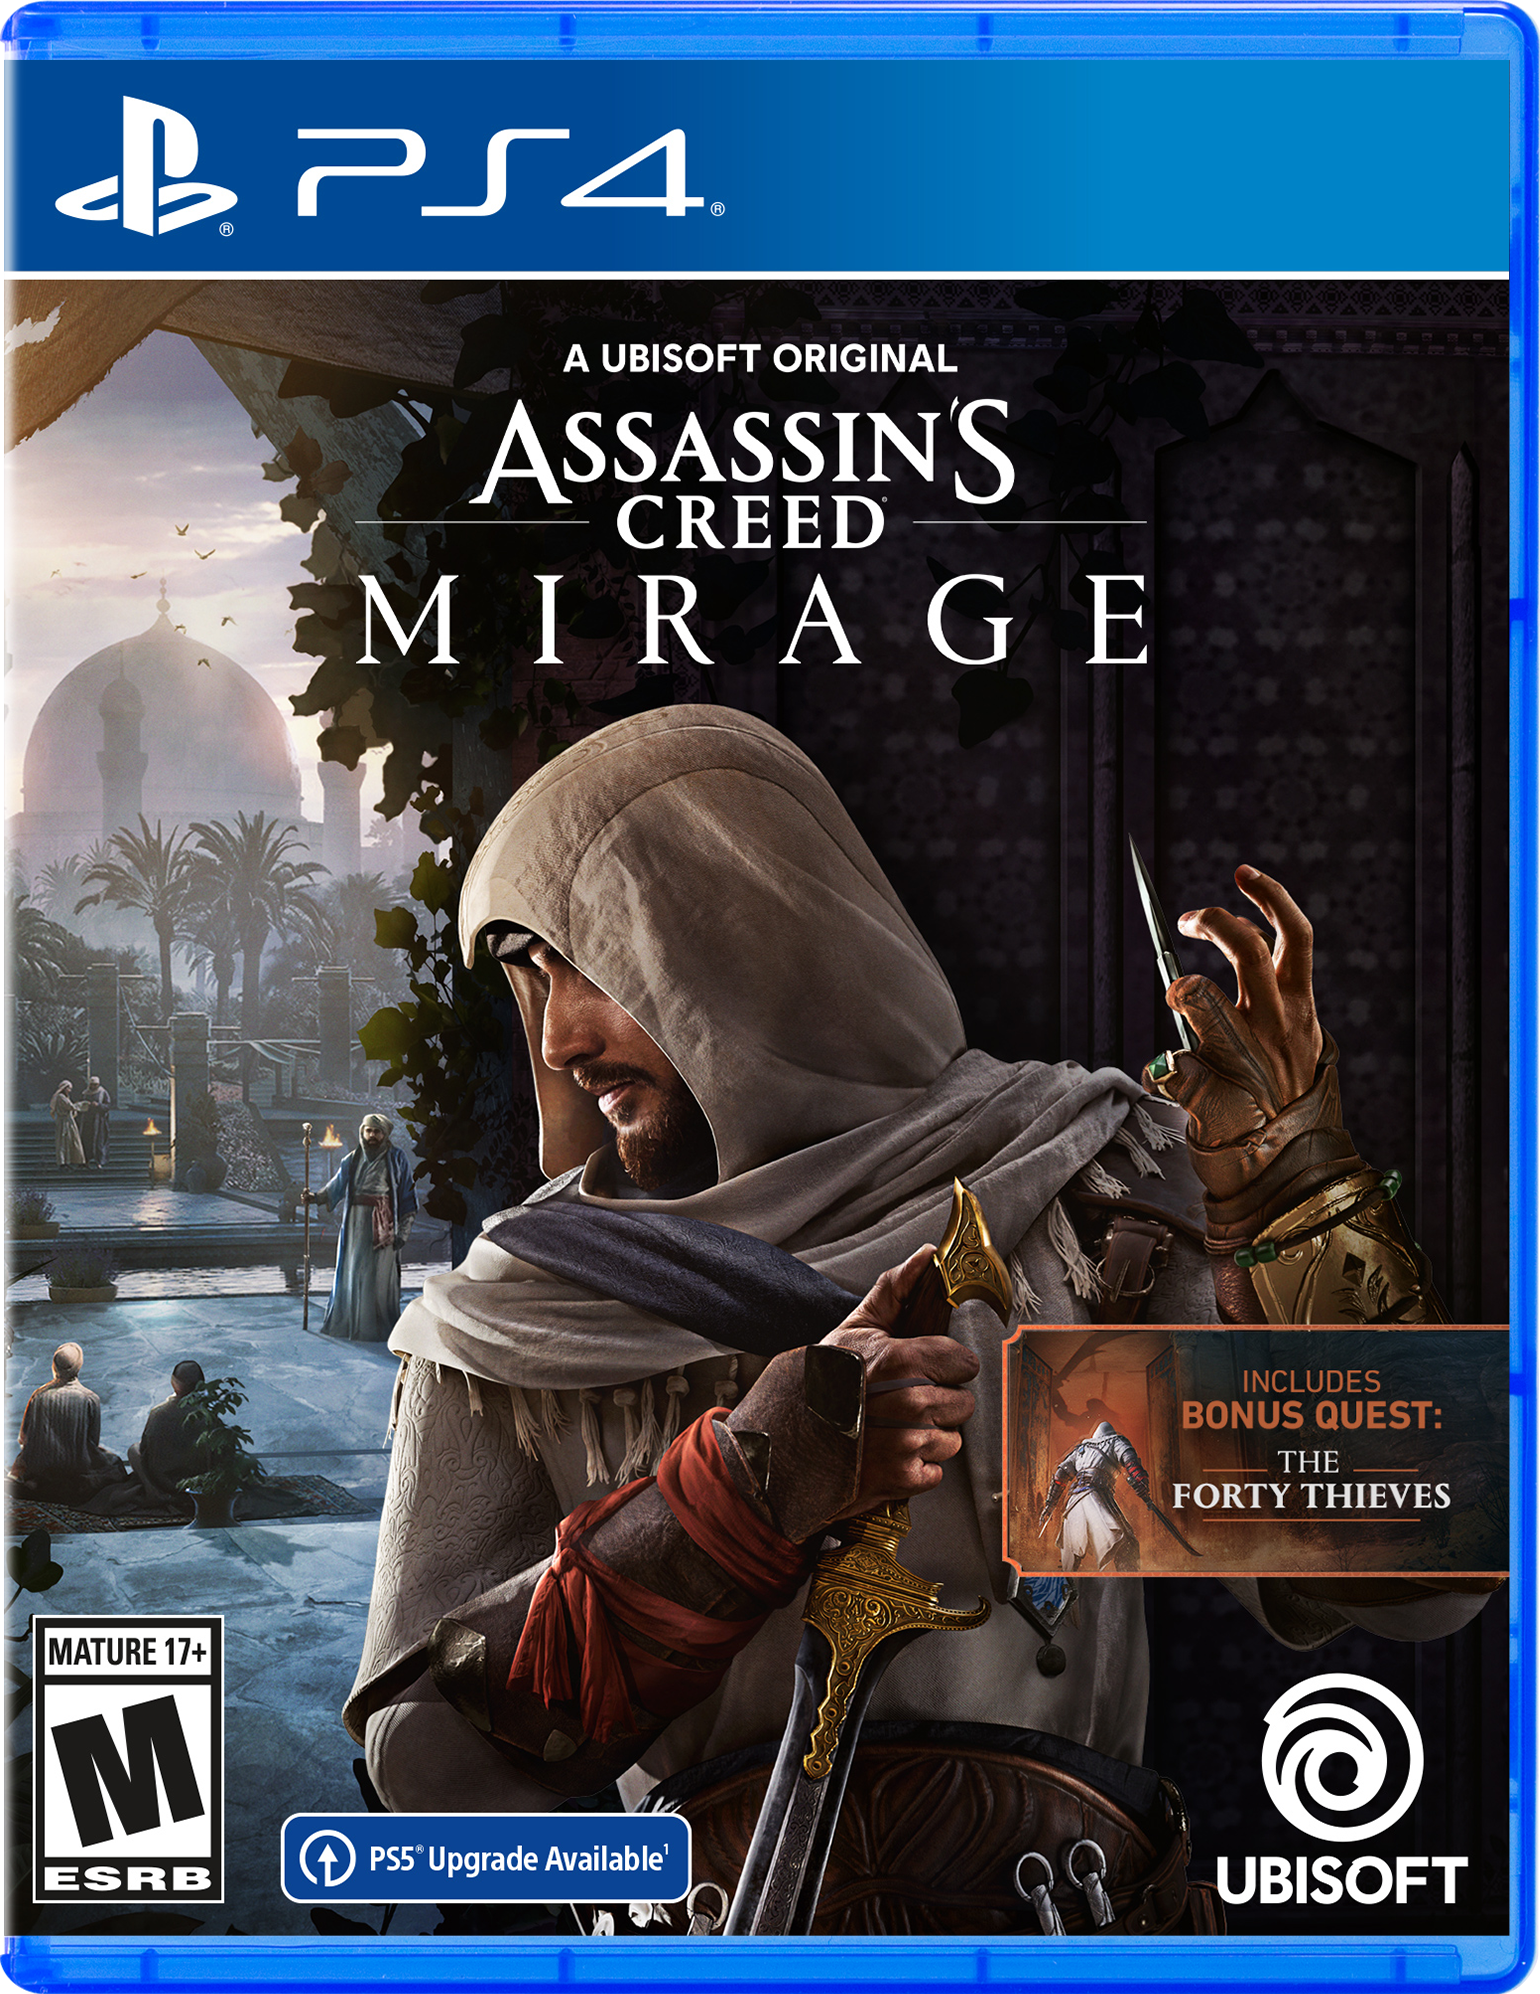 Assassin's Creed Origins PS5 VS PS4 Pro Graphics Comparison  Gameplay/PlayStation 5 VS PlayStation 4 